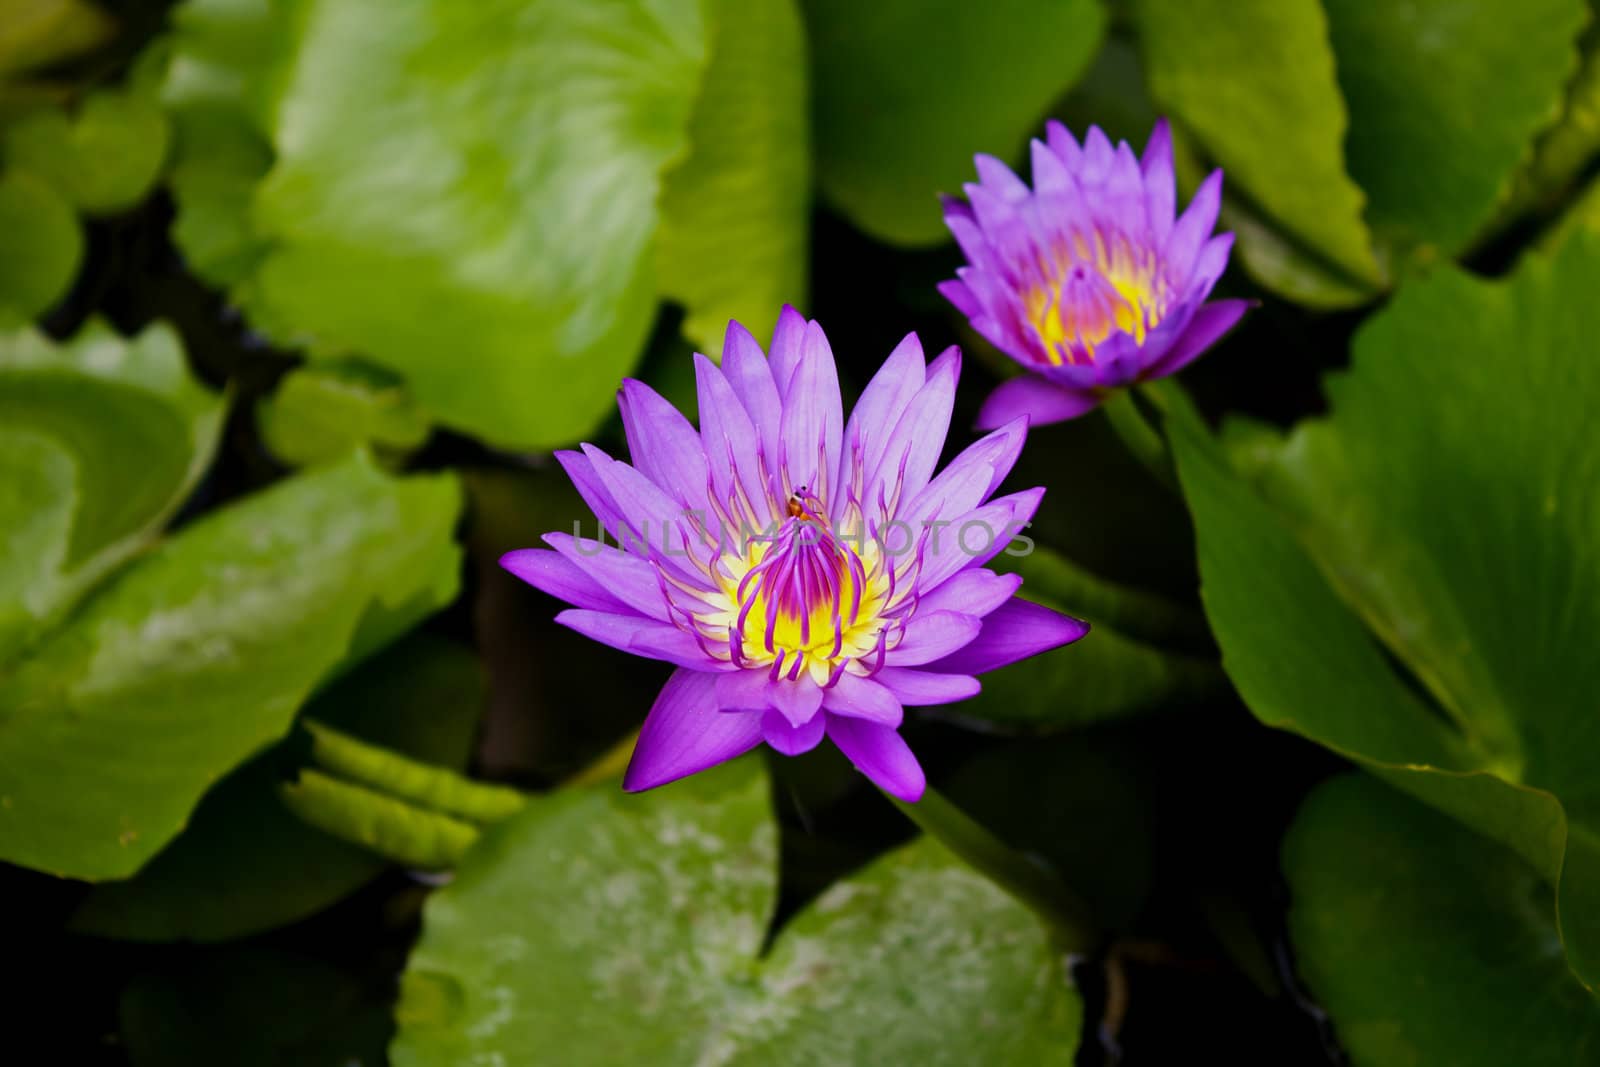  Purple lotus in the park. by singkamc